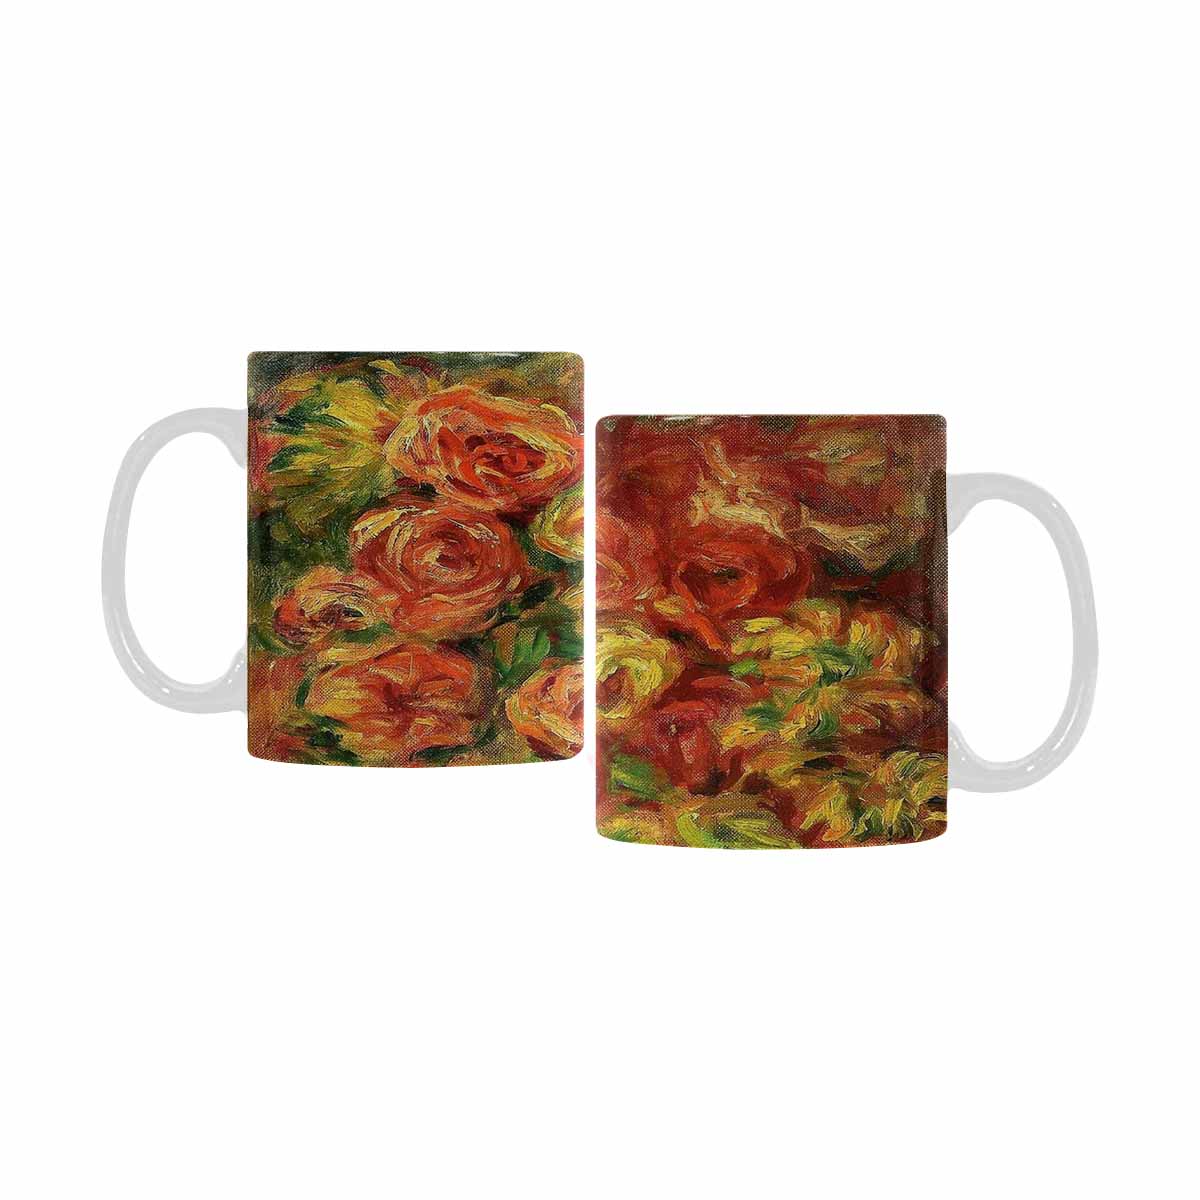 Vintage floral coffee mug or tea cup, Design 18